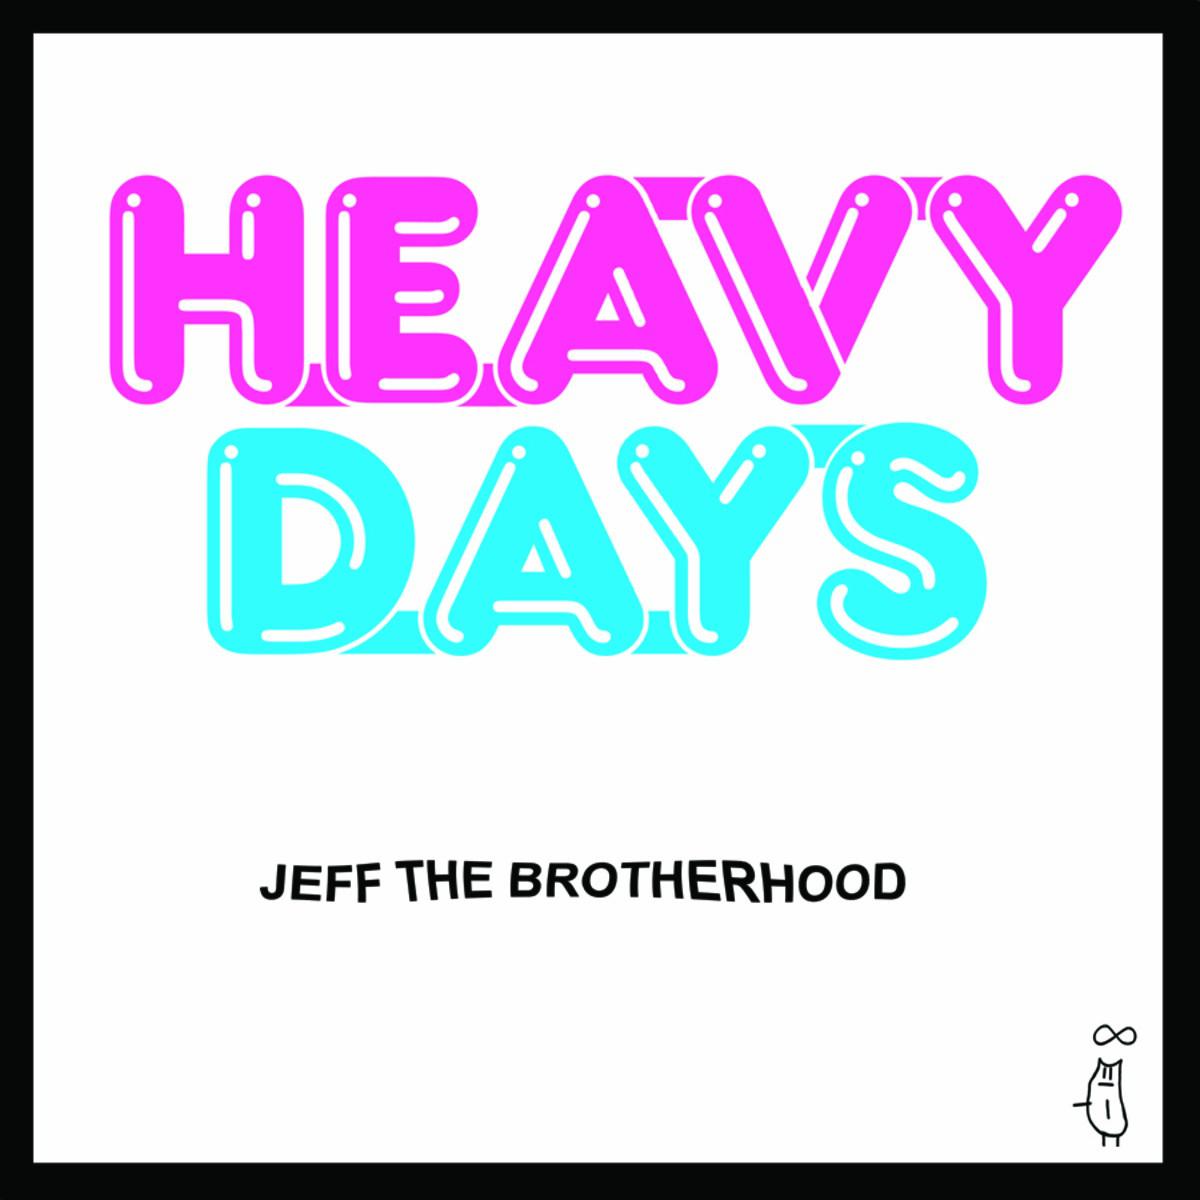 Jeff the Brotherhood - Heavy Days